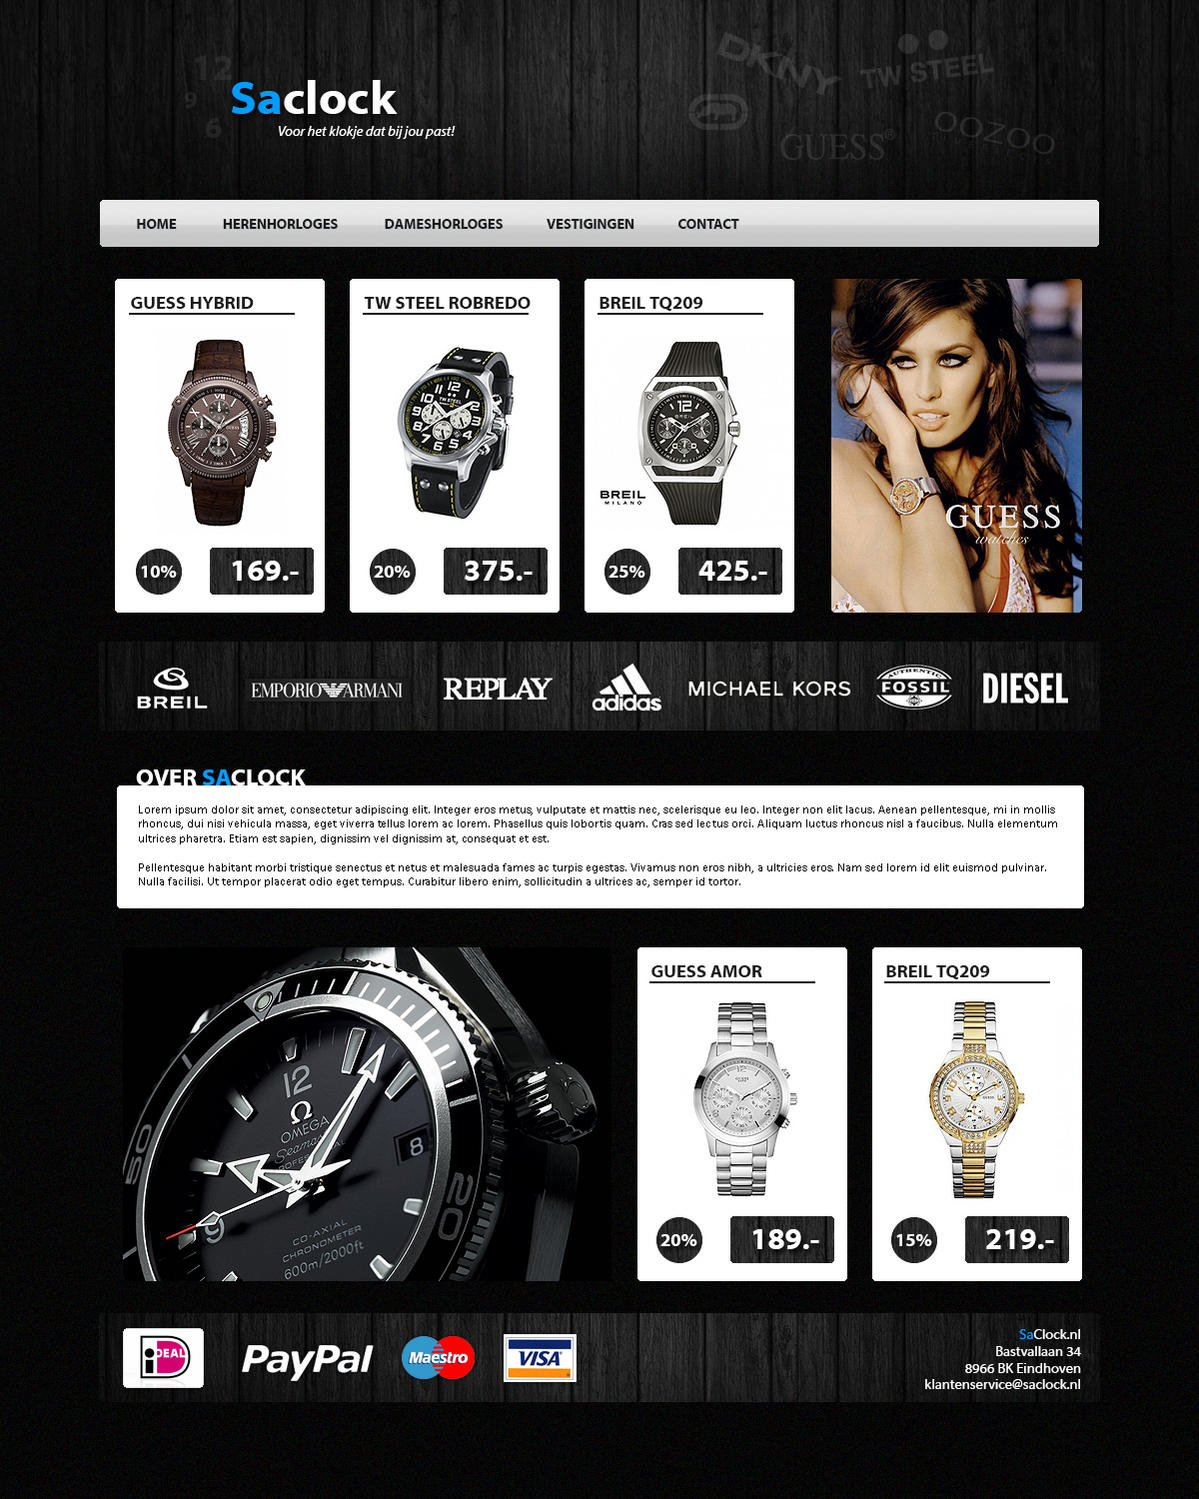 Webshop layout / Horloges-horloges-saclock-jpg